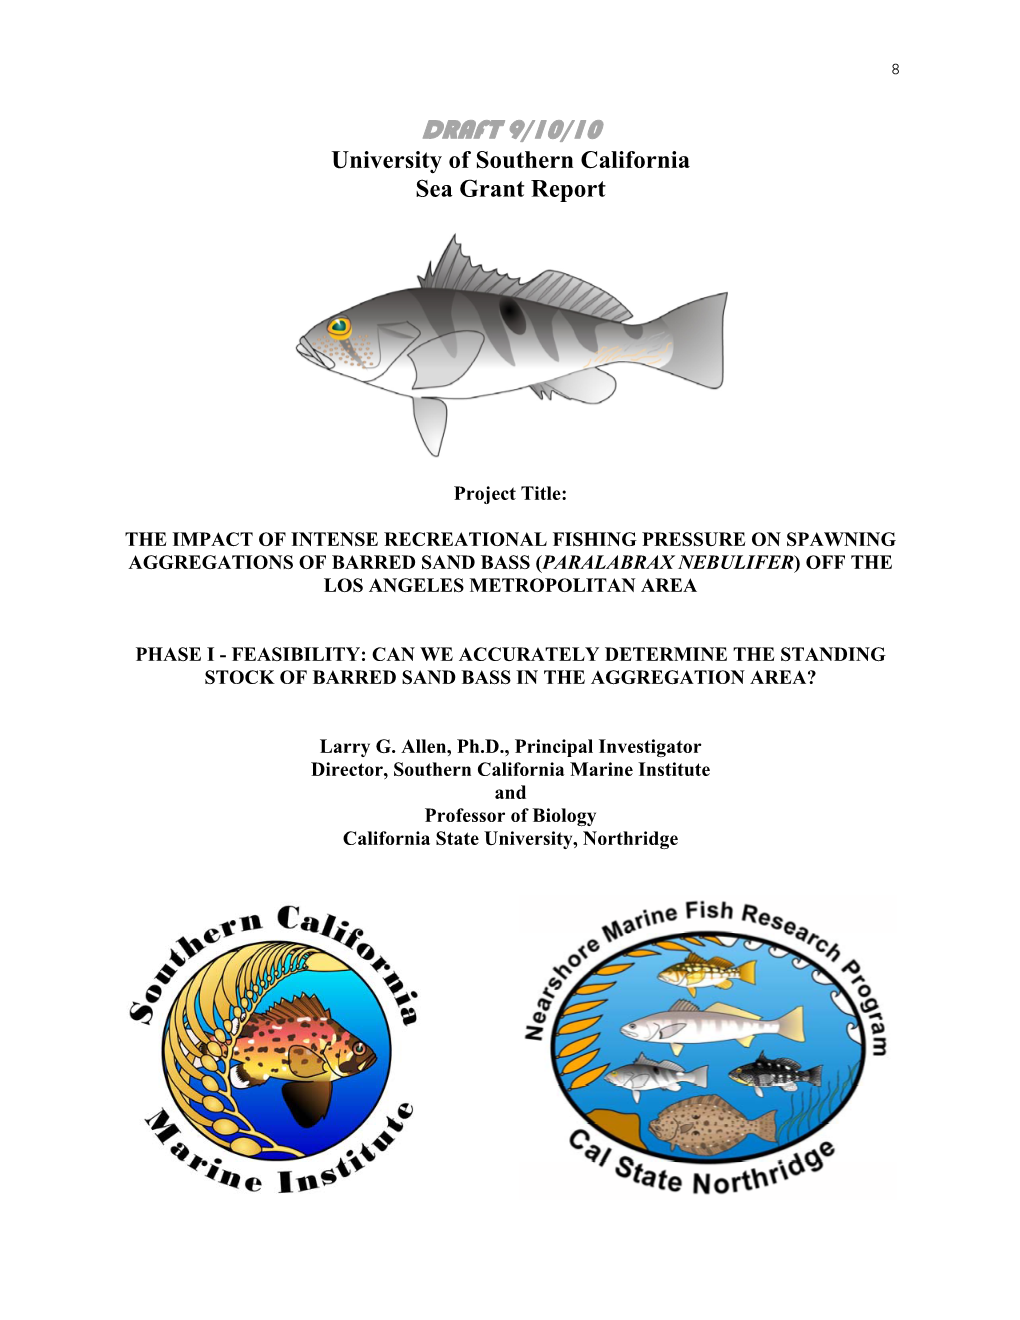 DRAFT 9/10/10 University of Southern California Sea Grant Report